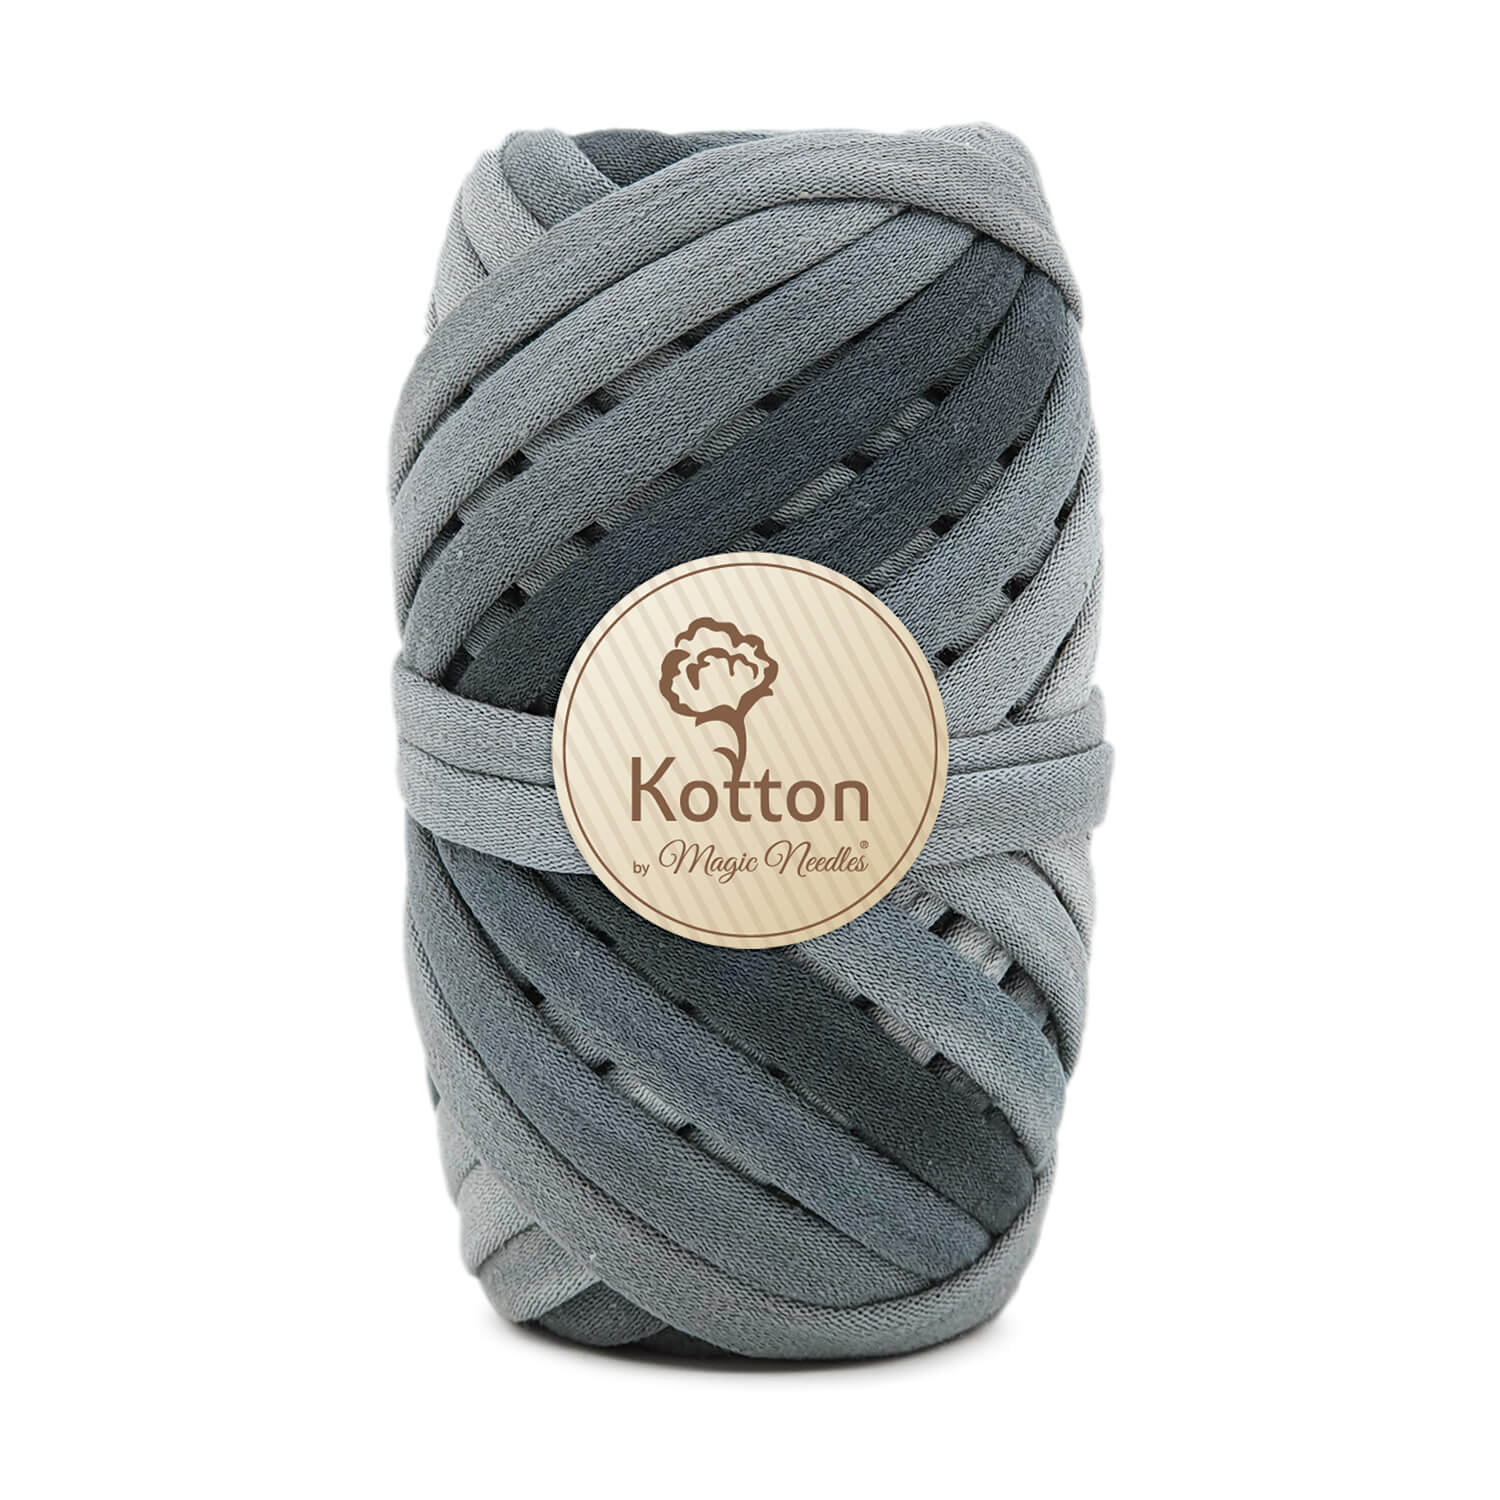 Kotton T-Shirt Yarn - Multi Color M06